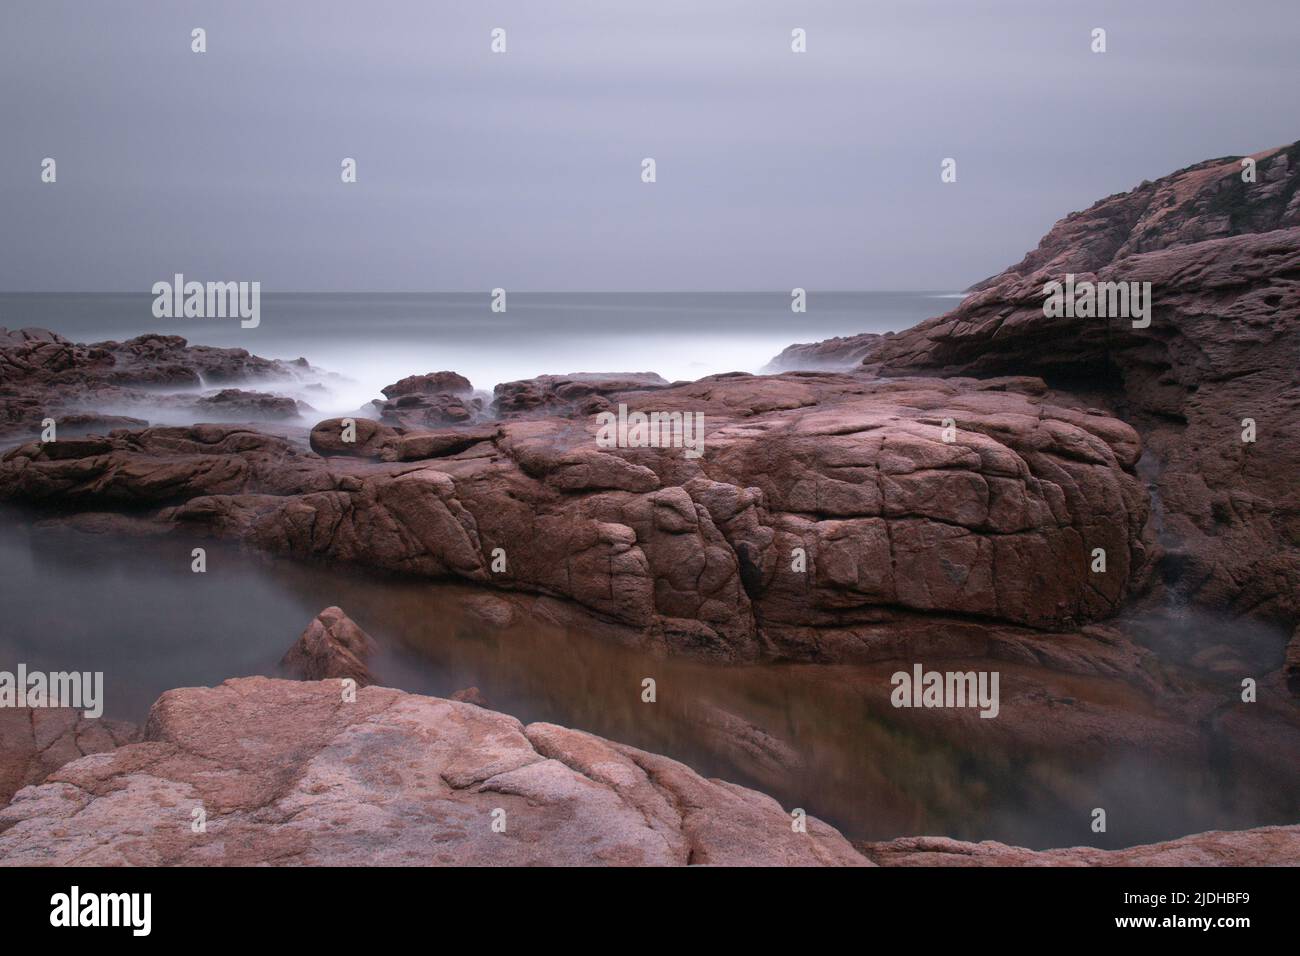 Very long exposure of waves breaking on rocks.  Dull grey sky overhead. Stock Photo